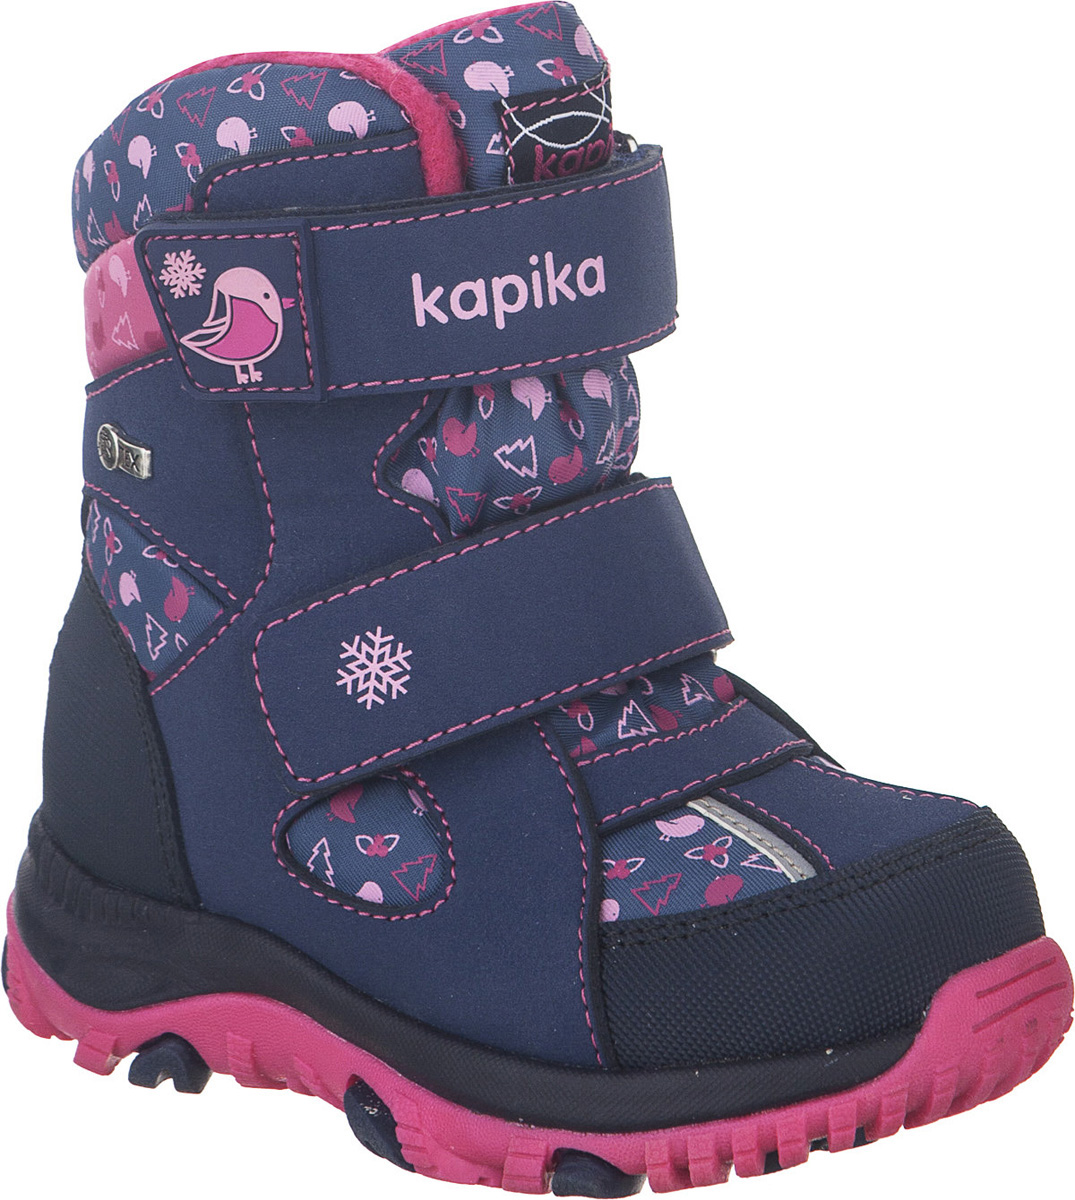 Ботинки для девочки Kapika KapiTEX, цвет: темно-синий, фуксия. 41223-1. Размер 25